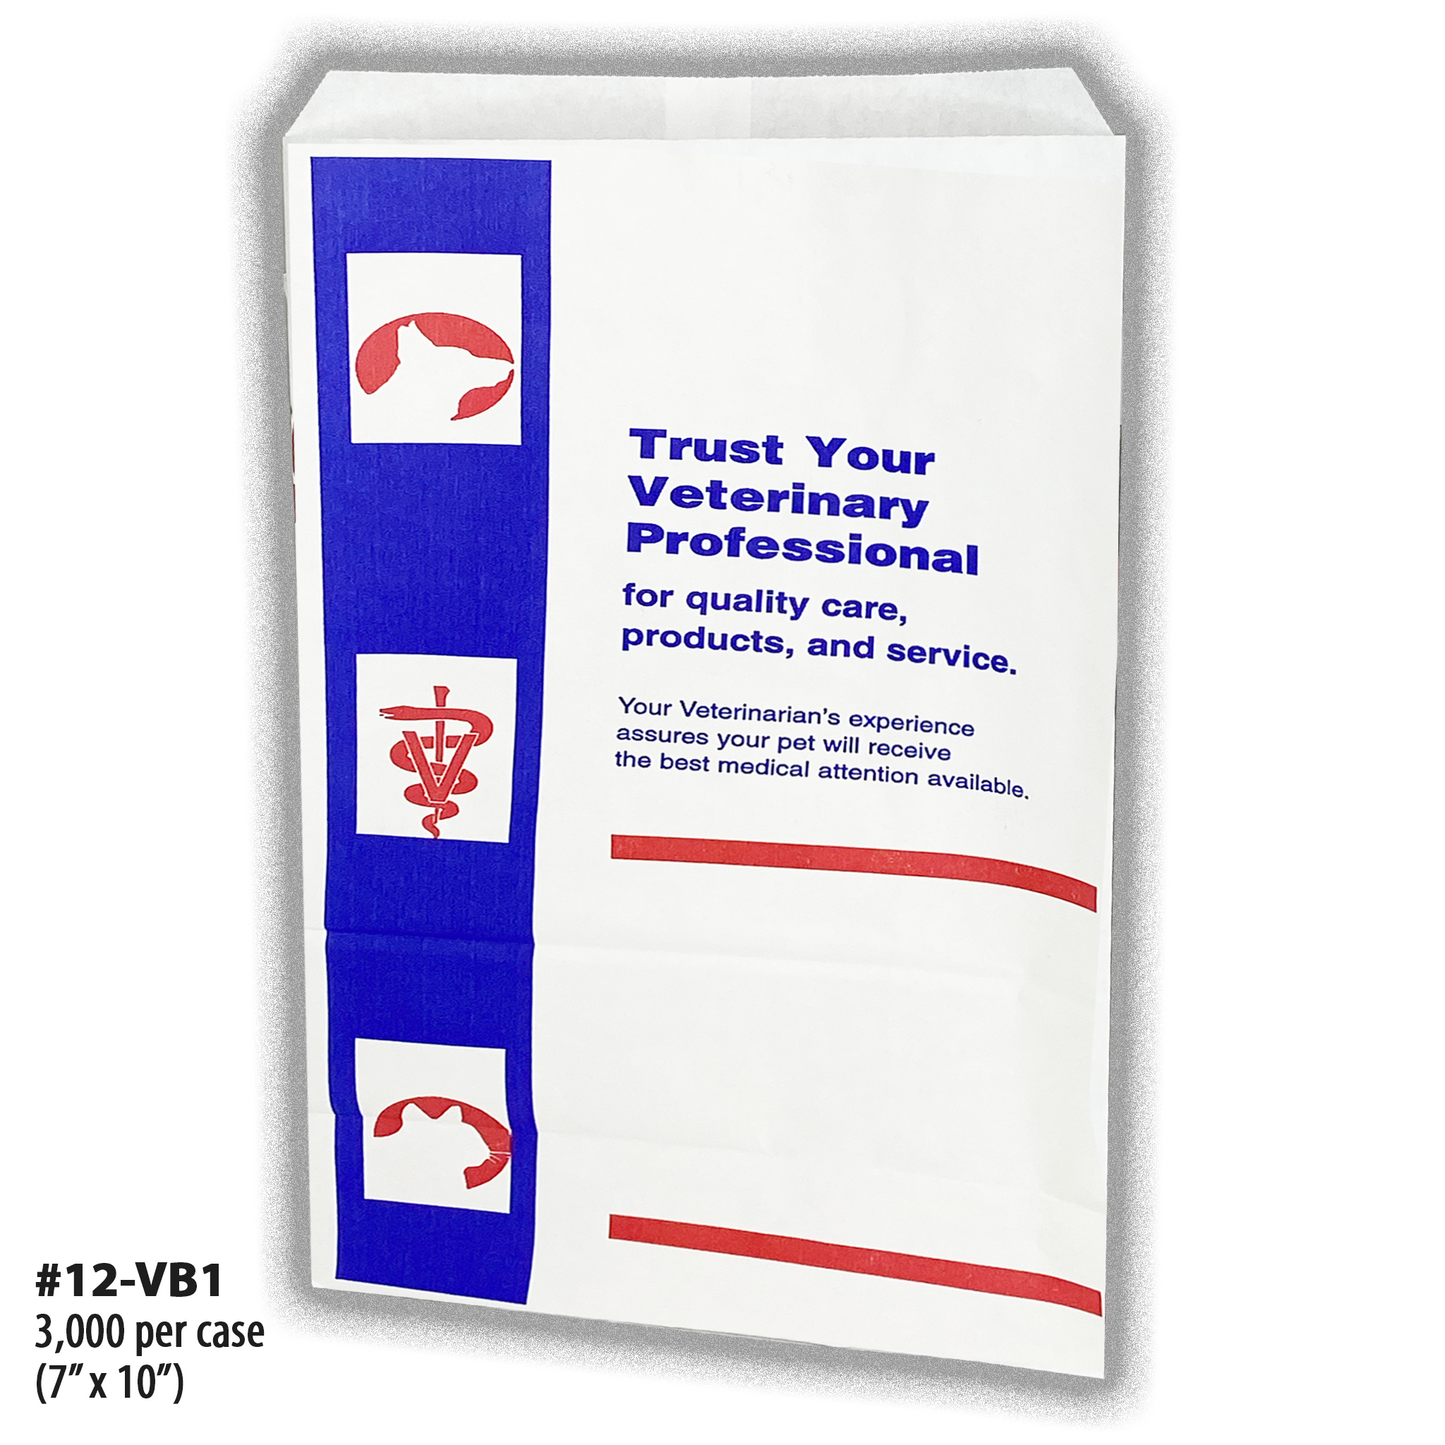 Veterinary Bag Design #VB1